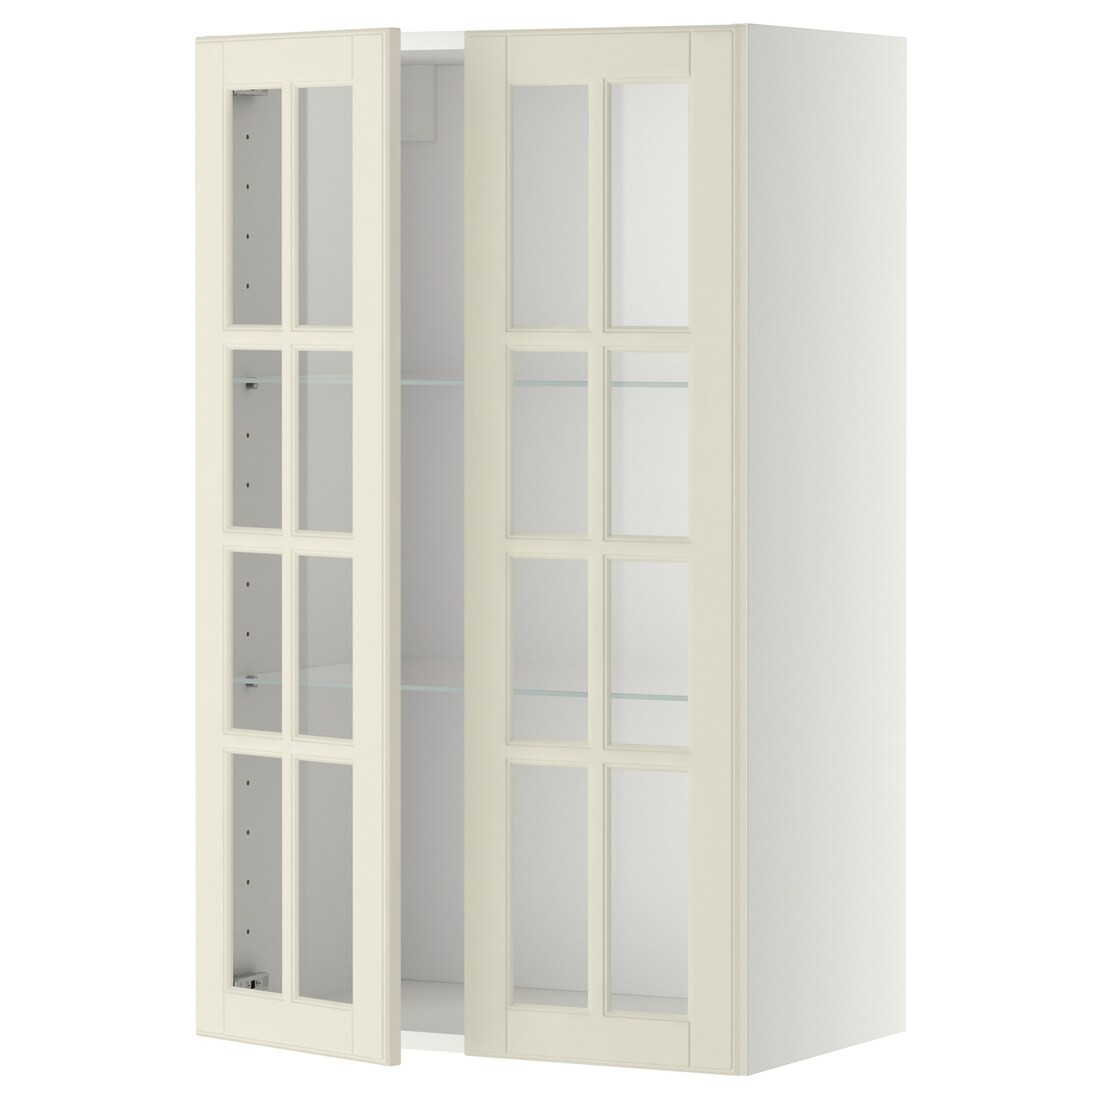 IKEA METOD МЕТОД Навесной шкаф, белый / Bodbyn кремовый, 60x100 см 49394982 493.949.82